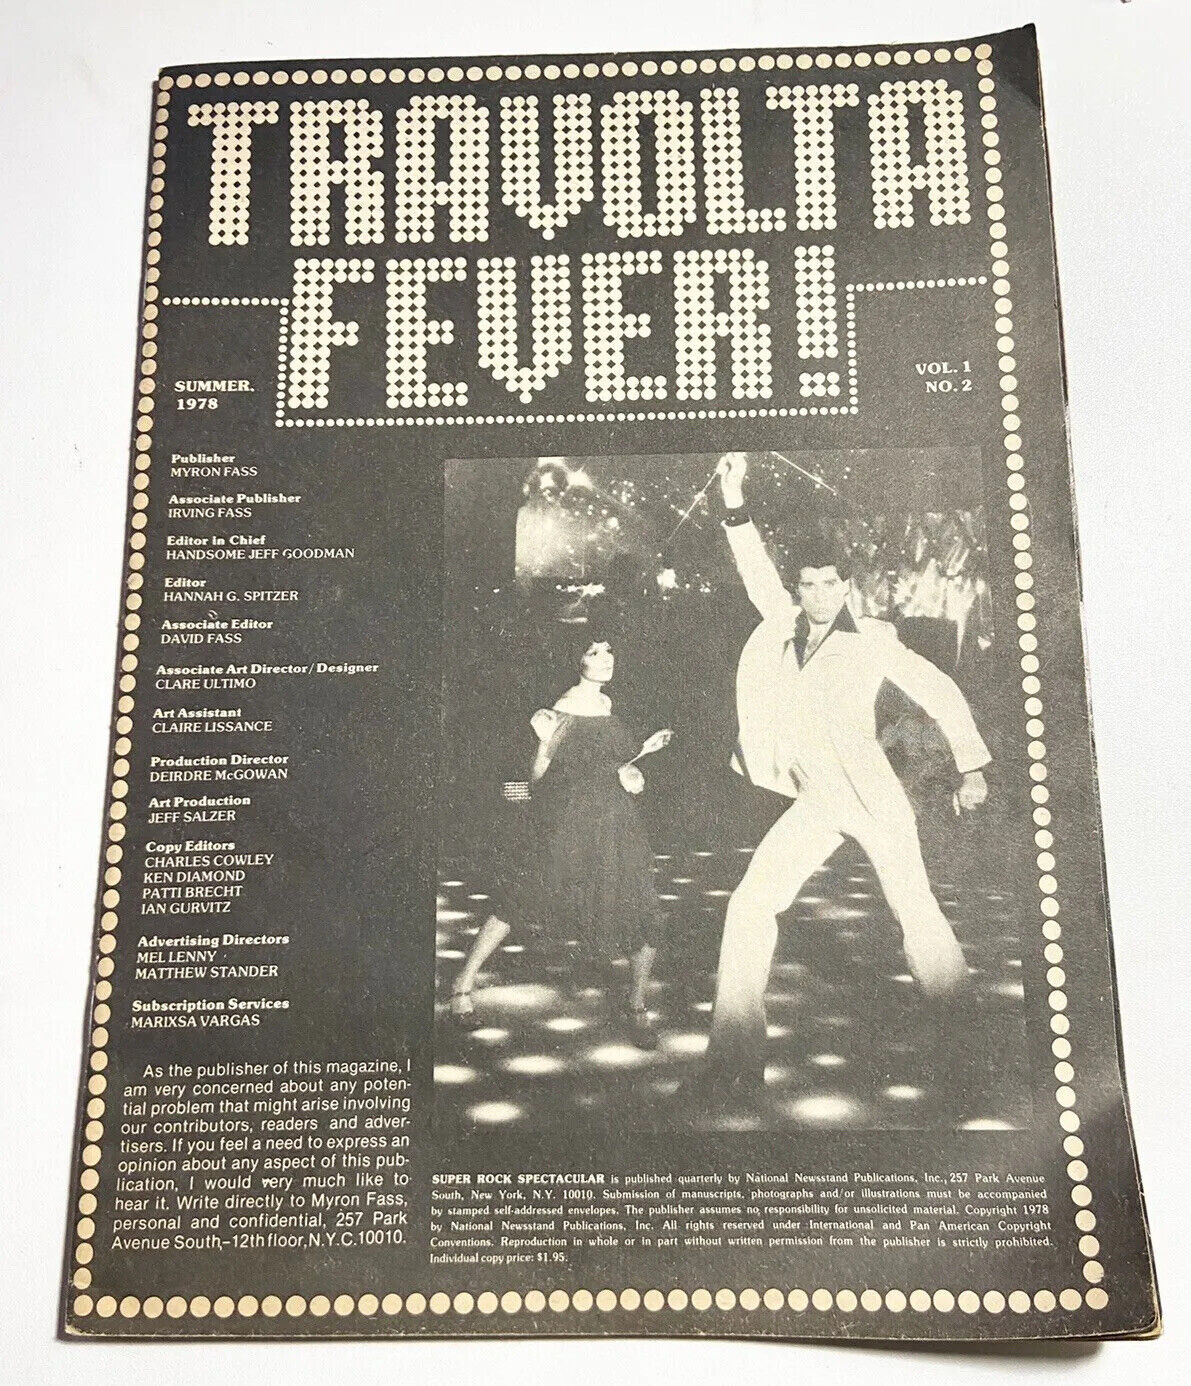 Vintage John  “Travolta Fever” Magazine Summer 1978 Vol 1, Iss 2 Fanzine News